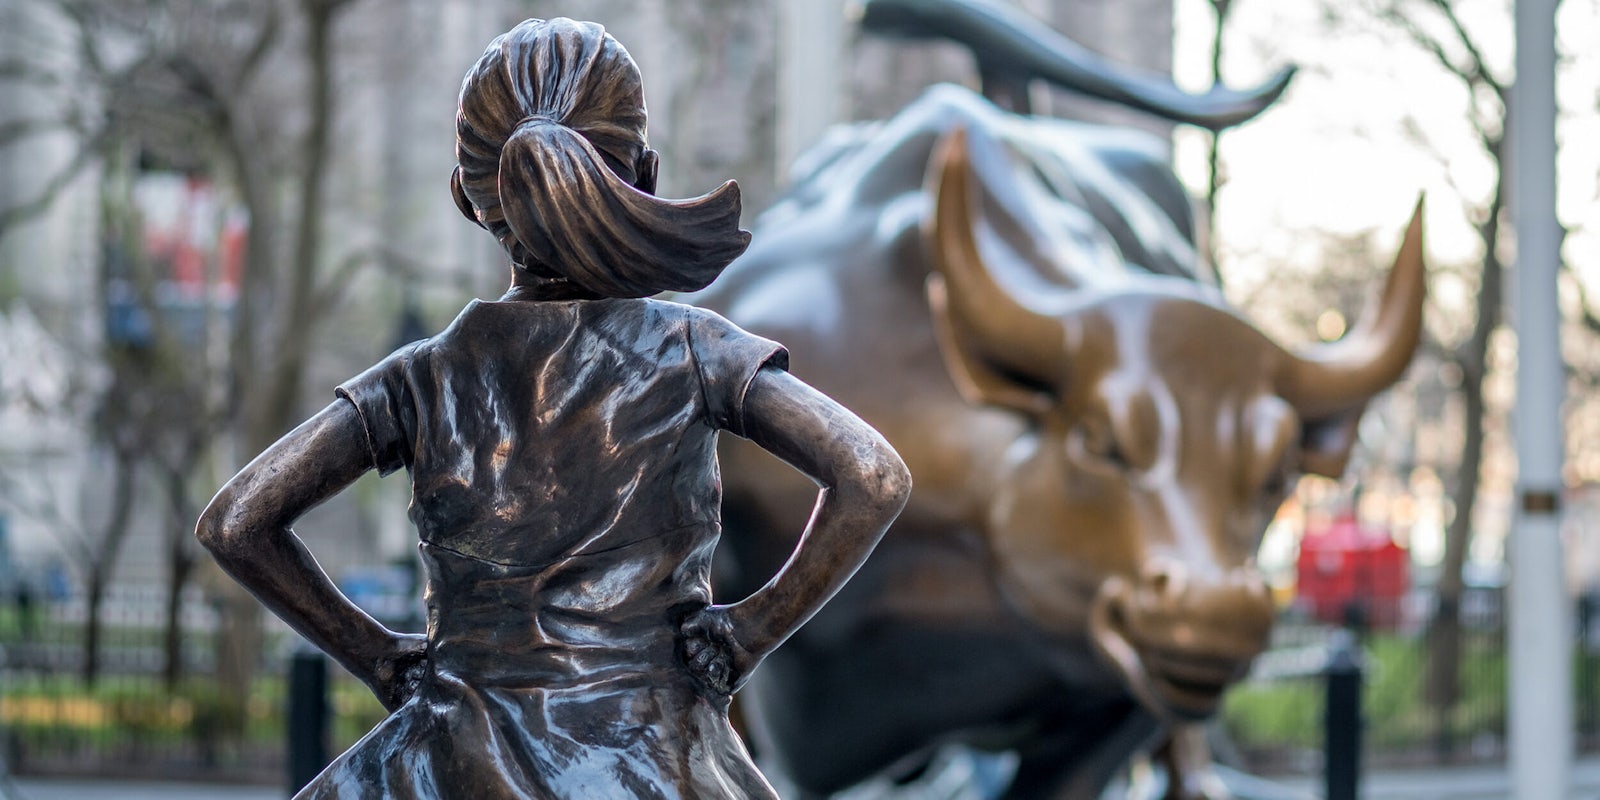 Fearless Girl statue near Wall Street bull